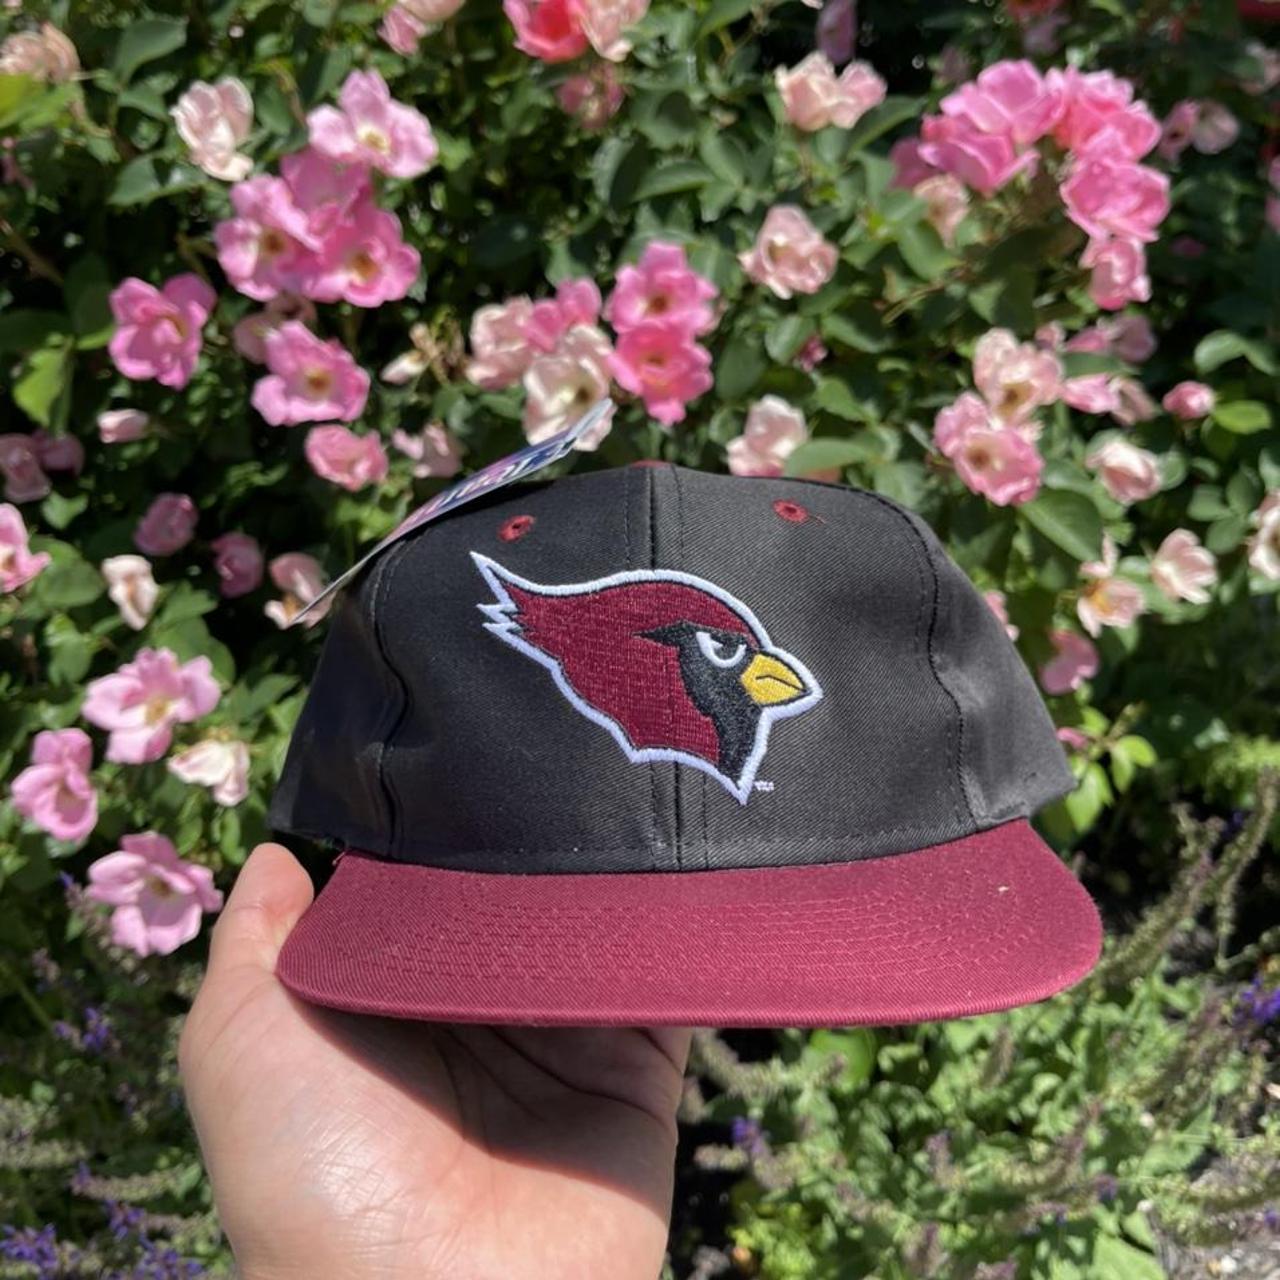 Vintage Arizona Cardinals SnapBack Hat. The hat is